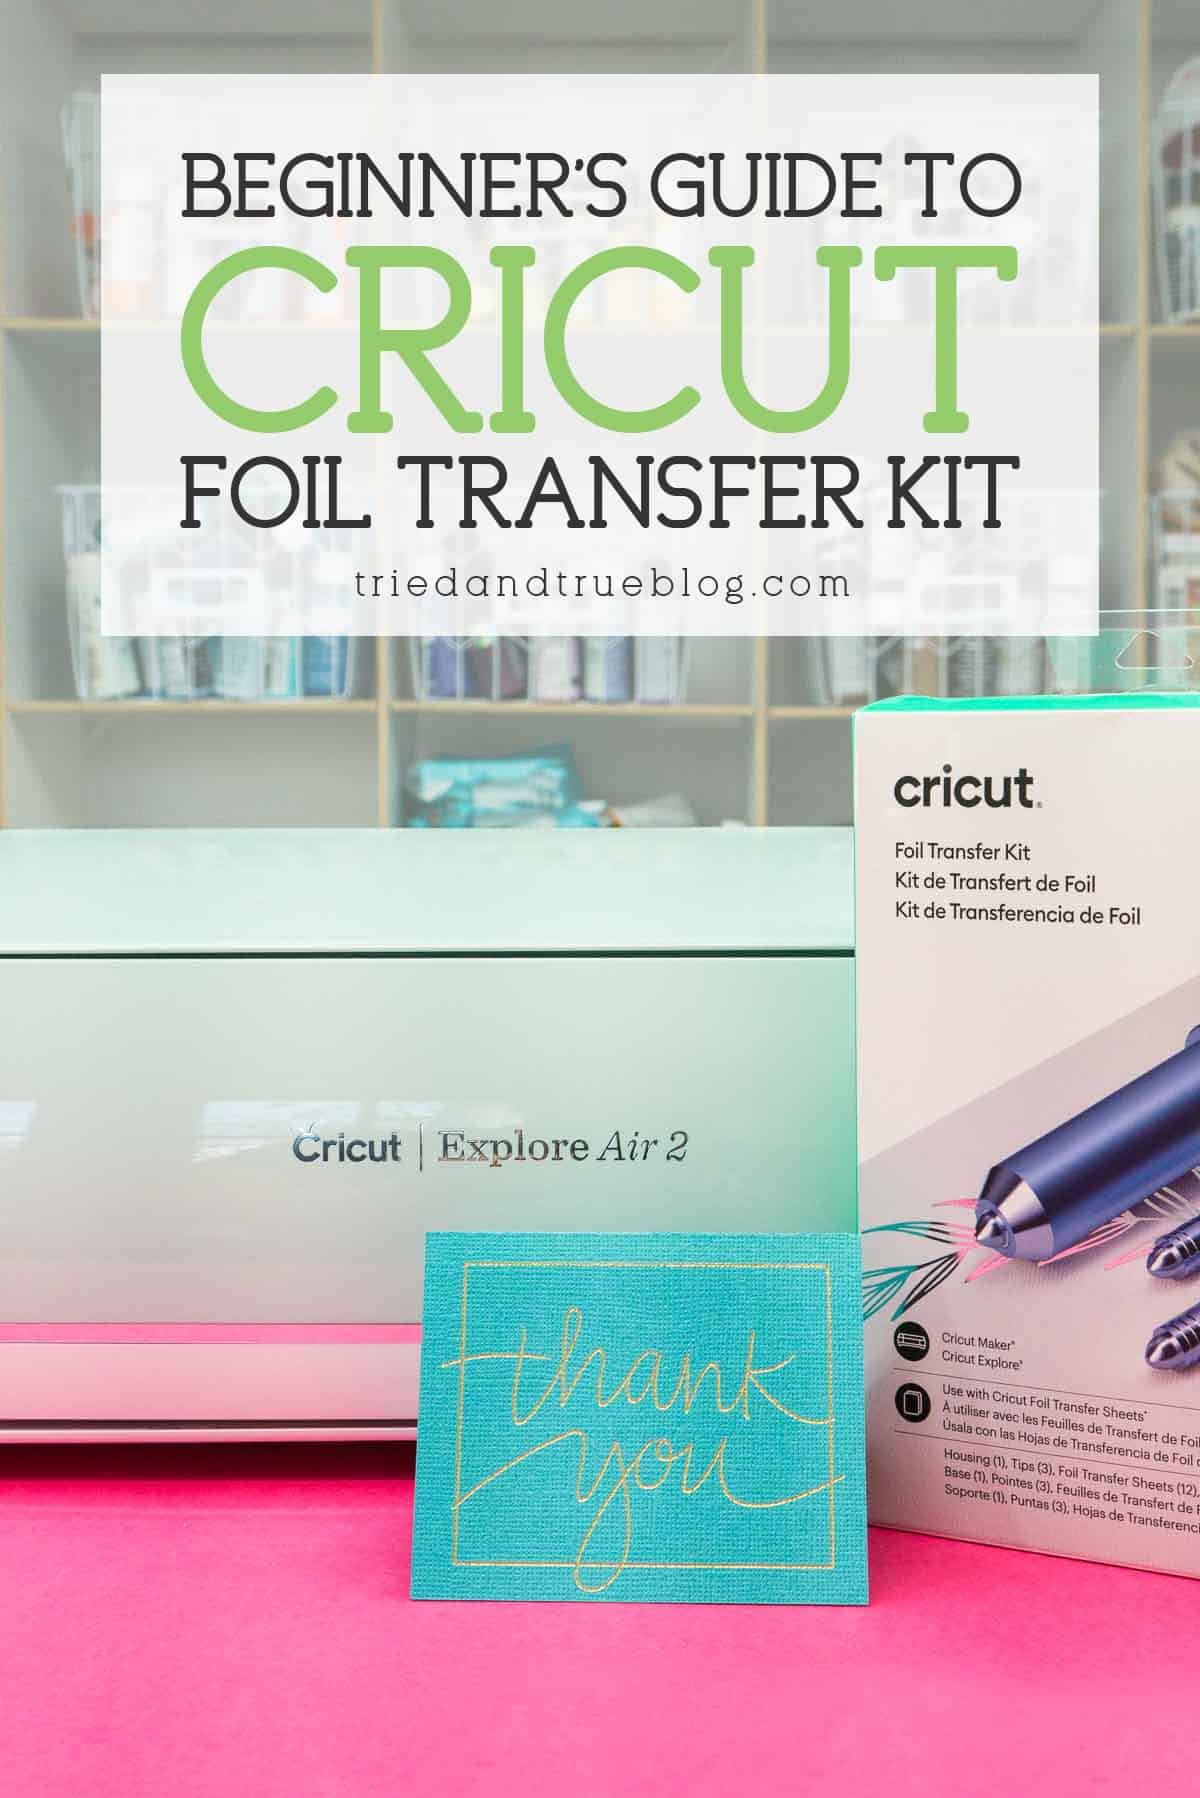 Cricut Foil Transfer Kit in front of 